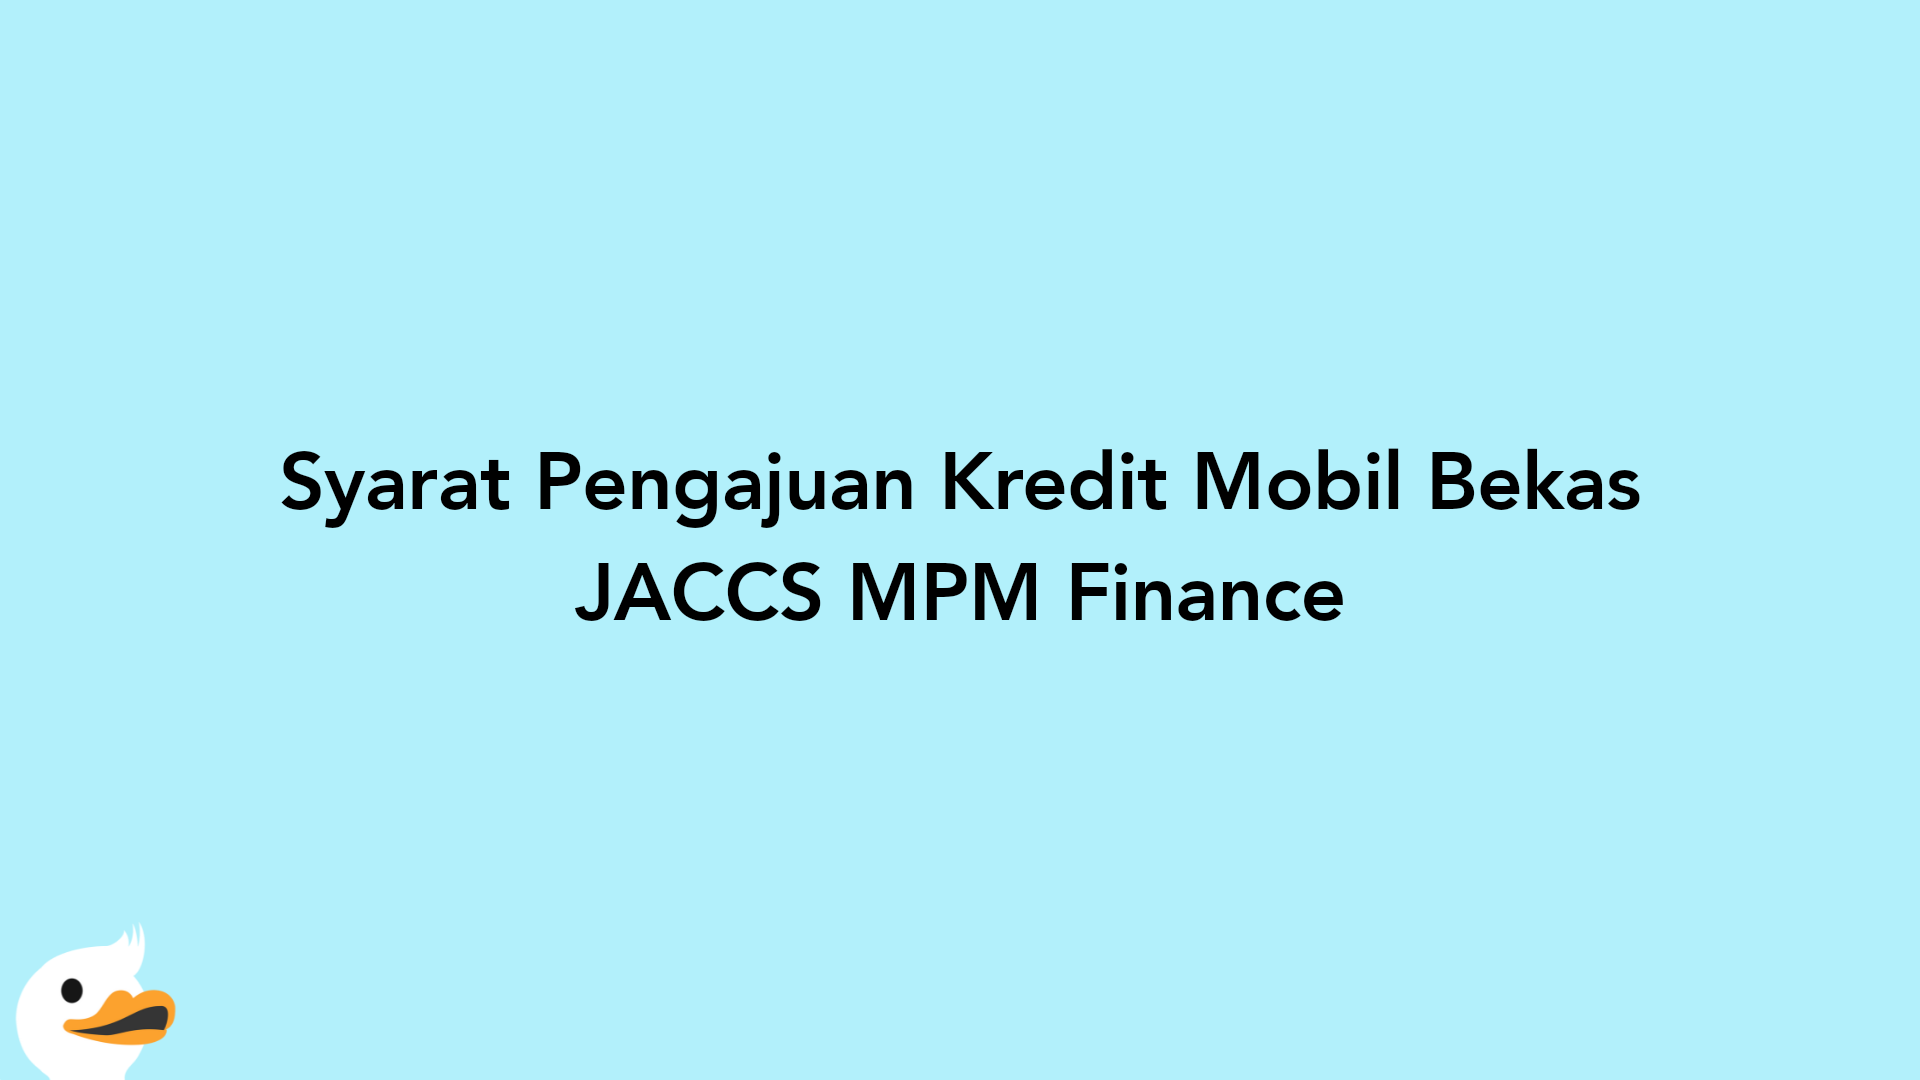 Syarat Pengajuan Kredit Mobil Bekas JACCS MPM Finance